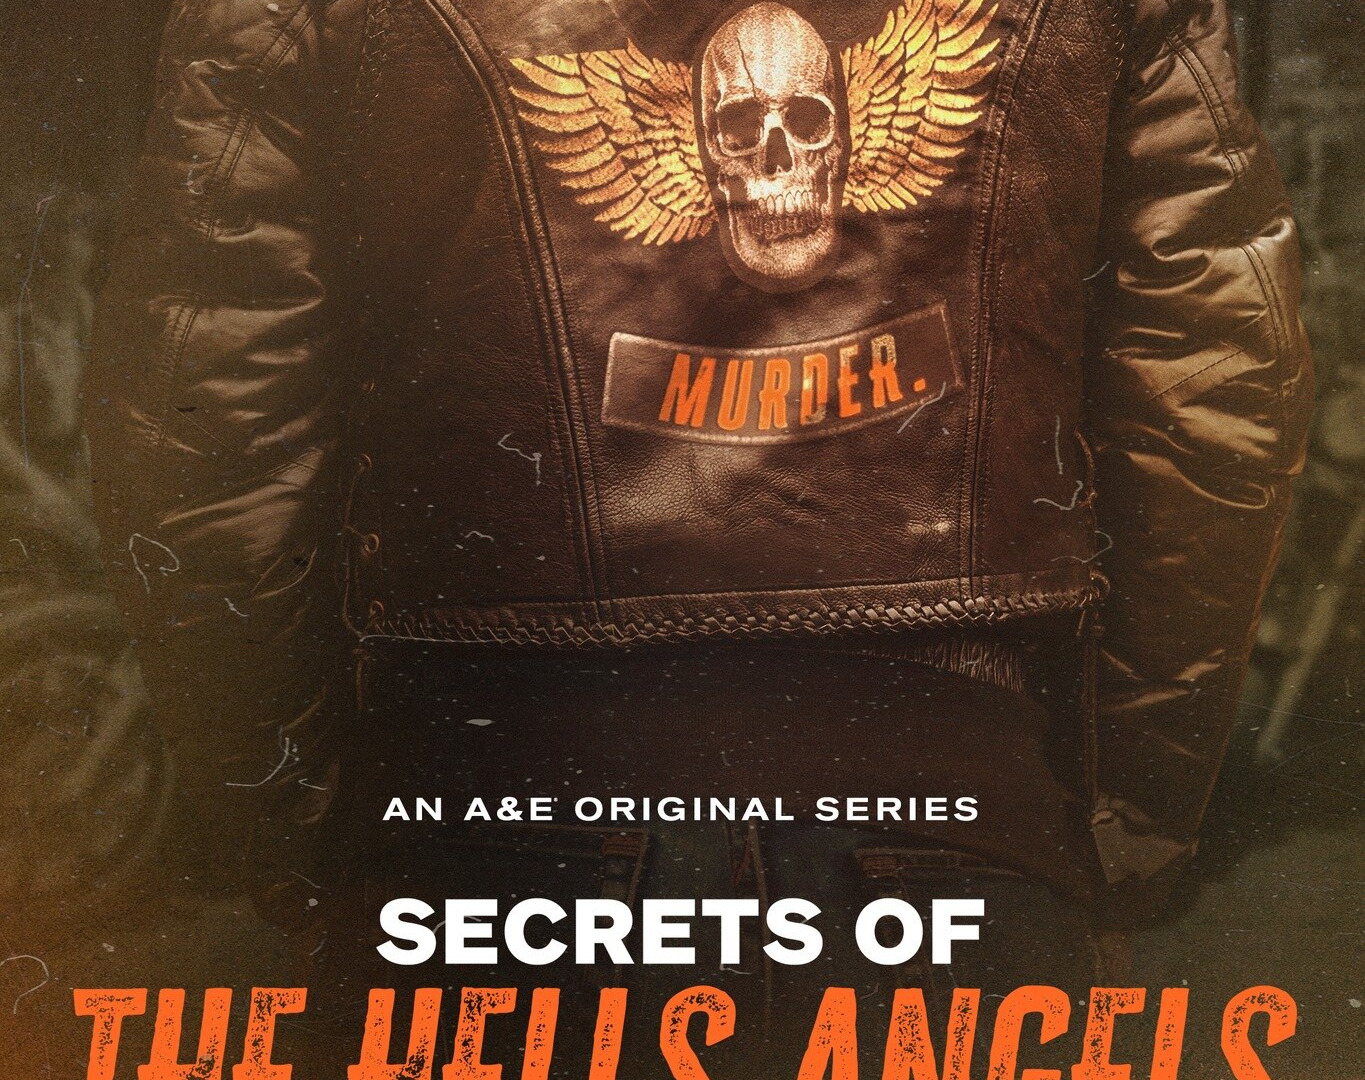 Show Secrets of the Hells Angels